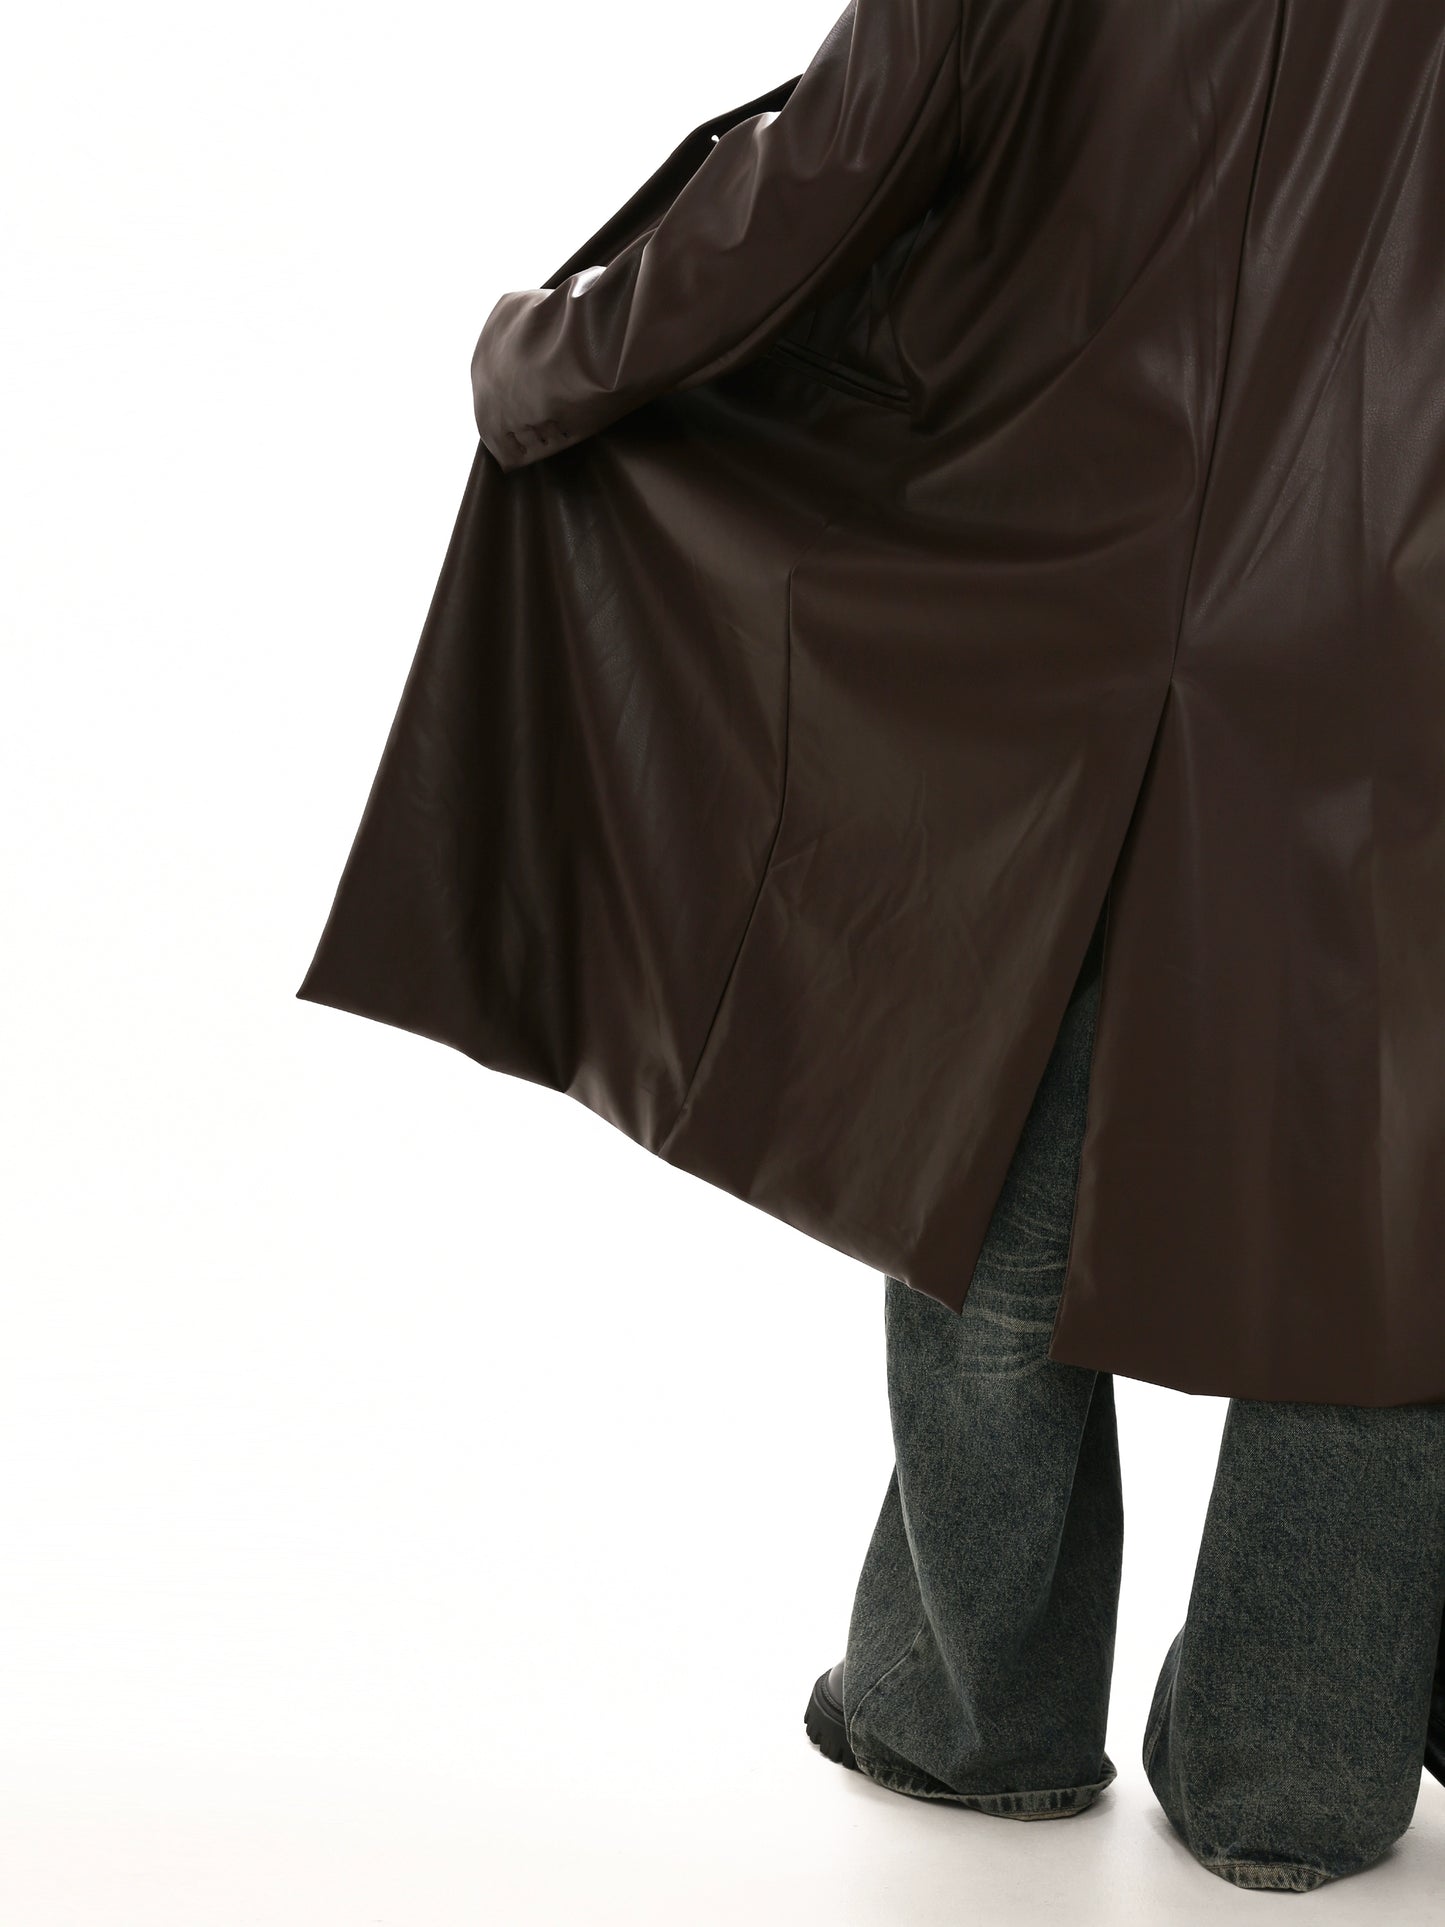 GIBBYCNA Long PU leather blazer coat